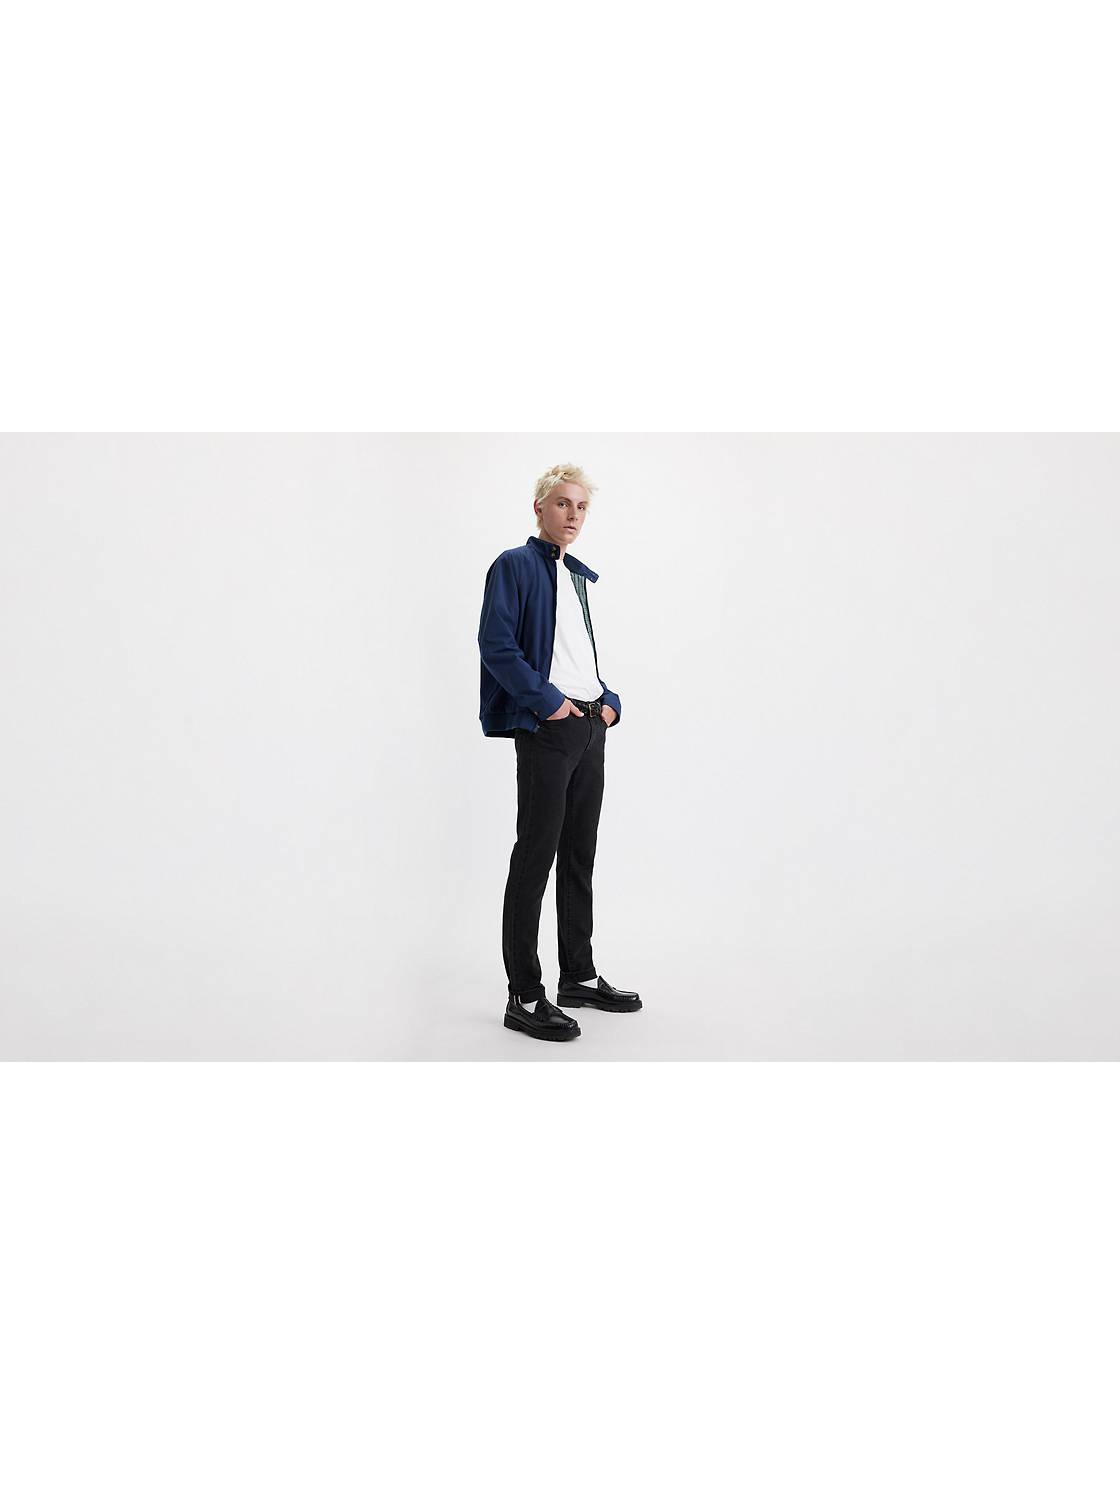 Selvedge Denim Jeans Collection for Men | Levi's® US